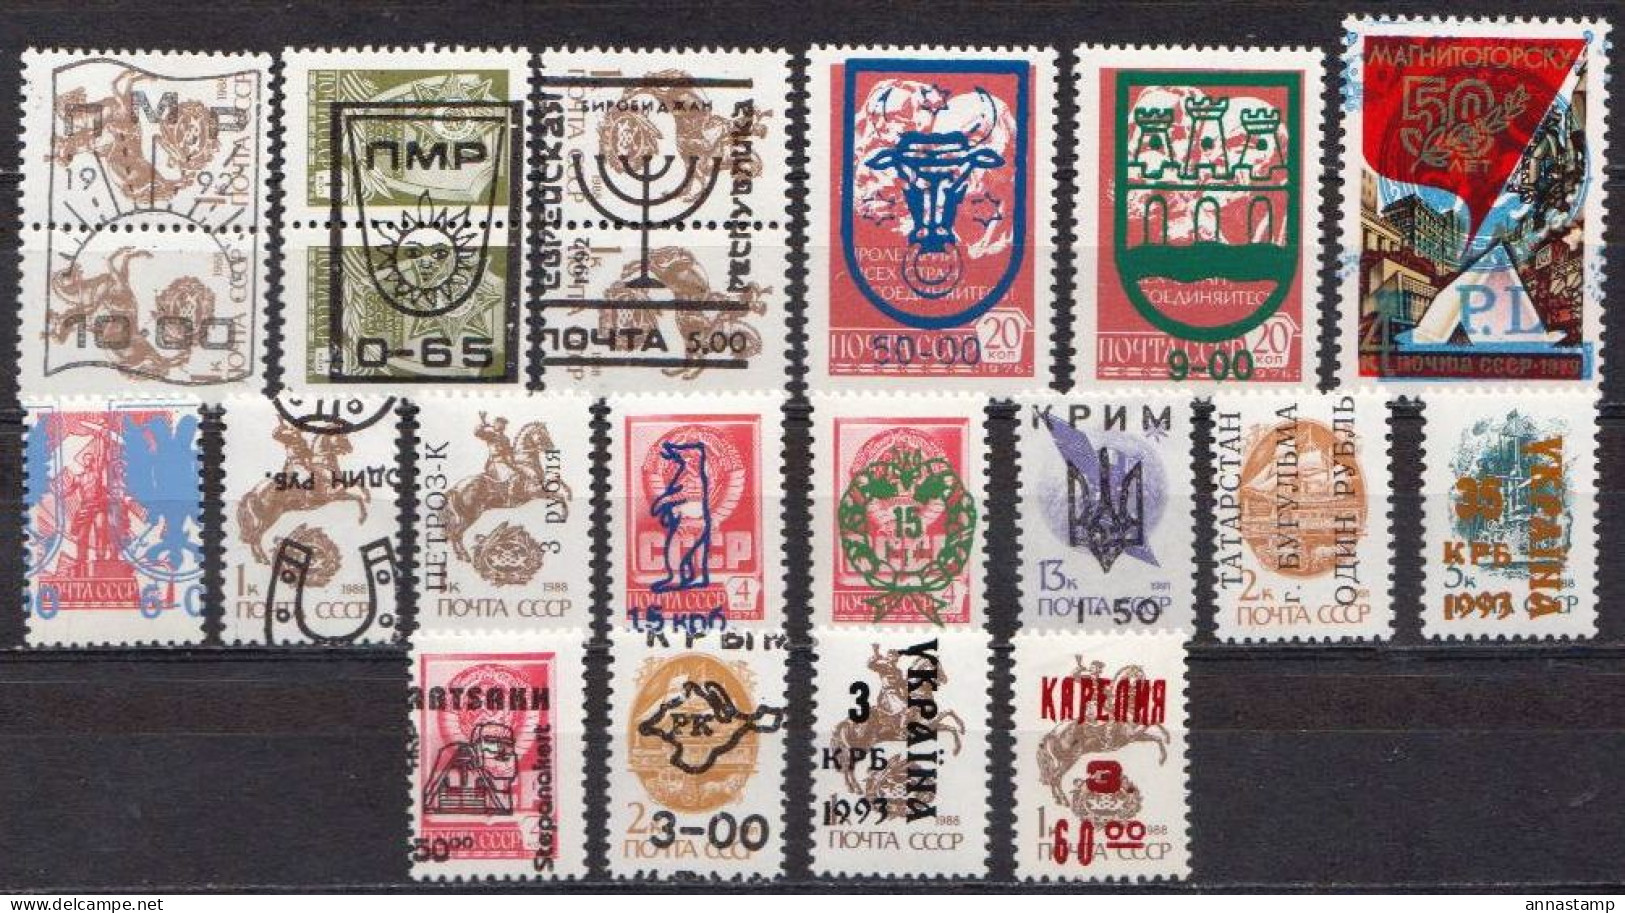 Russia MNH Overprinted Stamps With Local Overprints, Interesting! - Verzamelingen